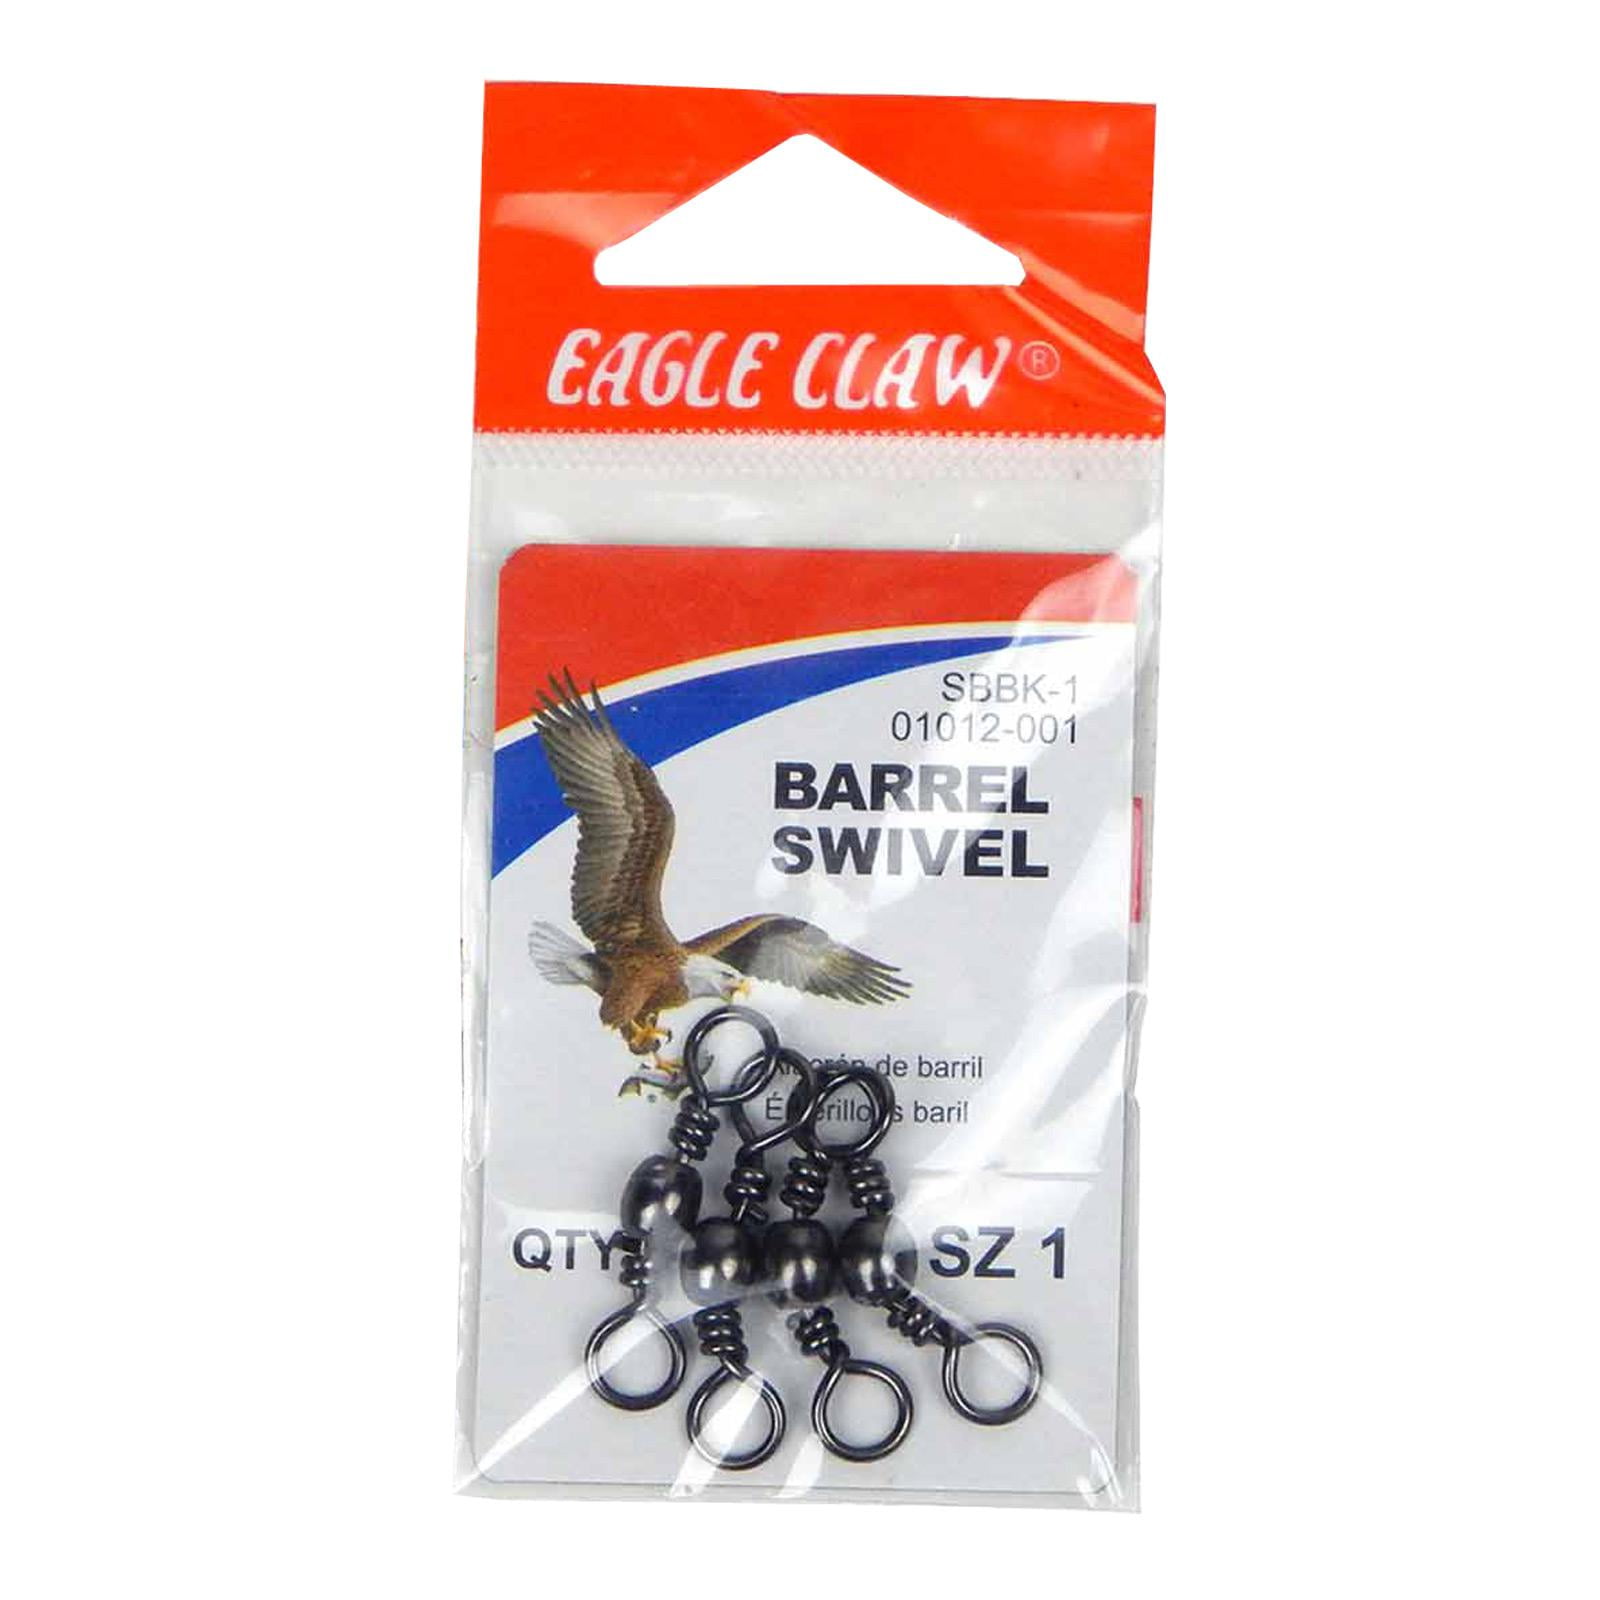 Eagle Claw Black Barrel Swivels Size 1 Pack of 4, 01012-001 